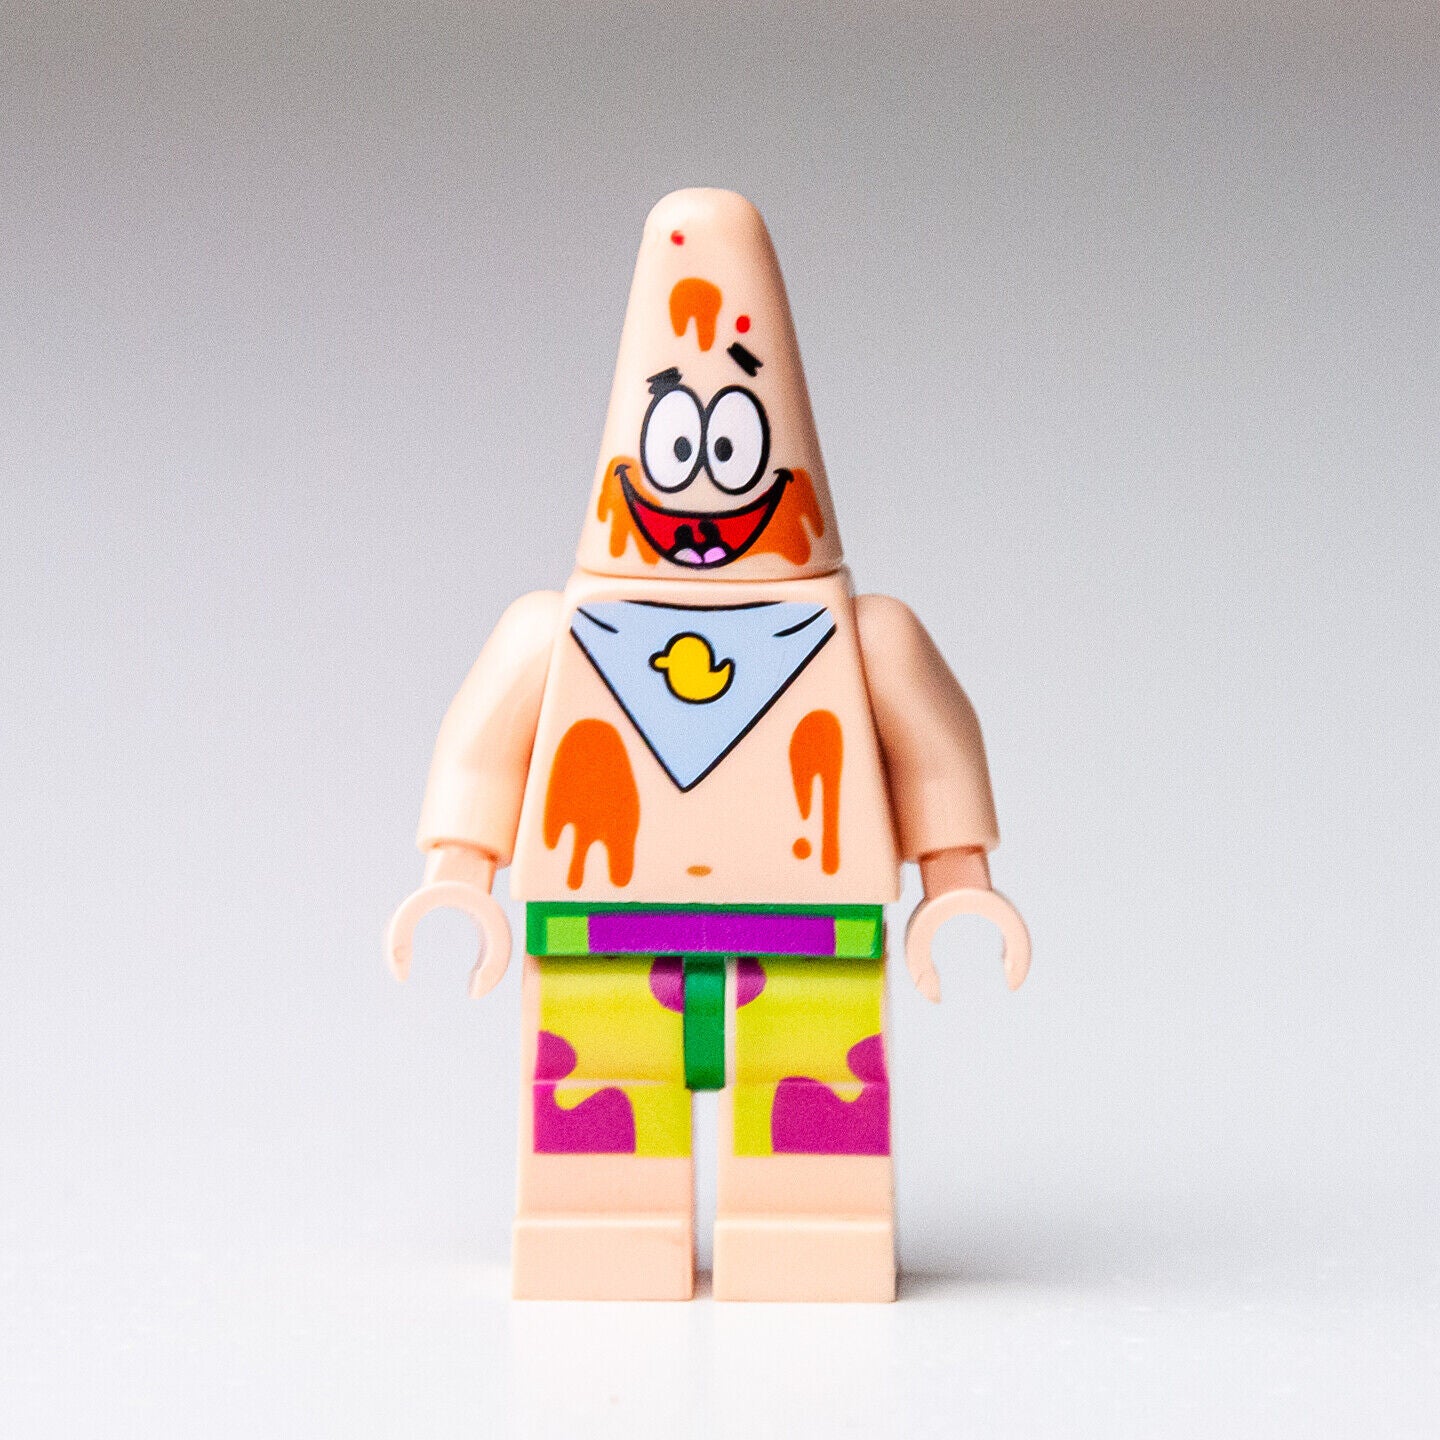 LEGO Spongebob Minifigure - Patrick w/ Bib, Ice Cream Splotches 3816 (bob030)